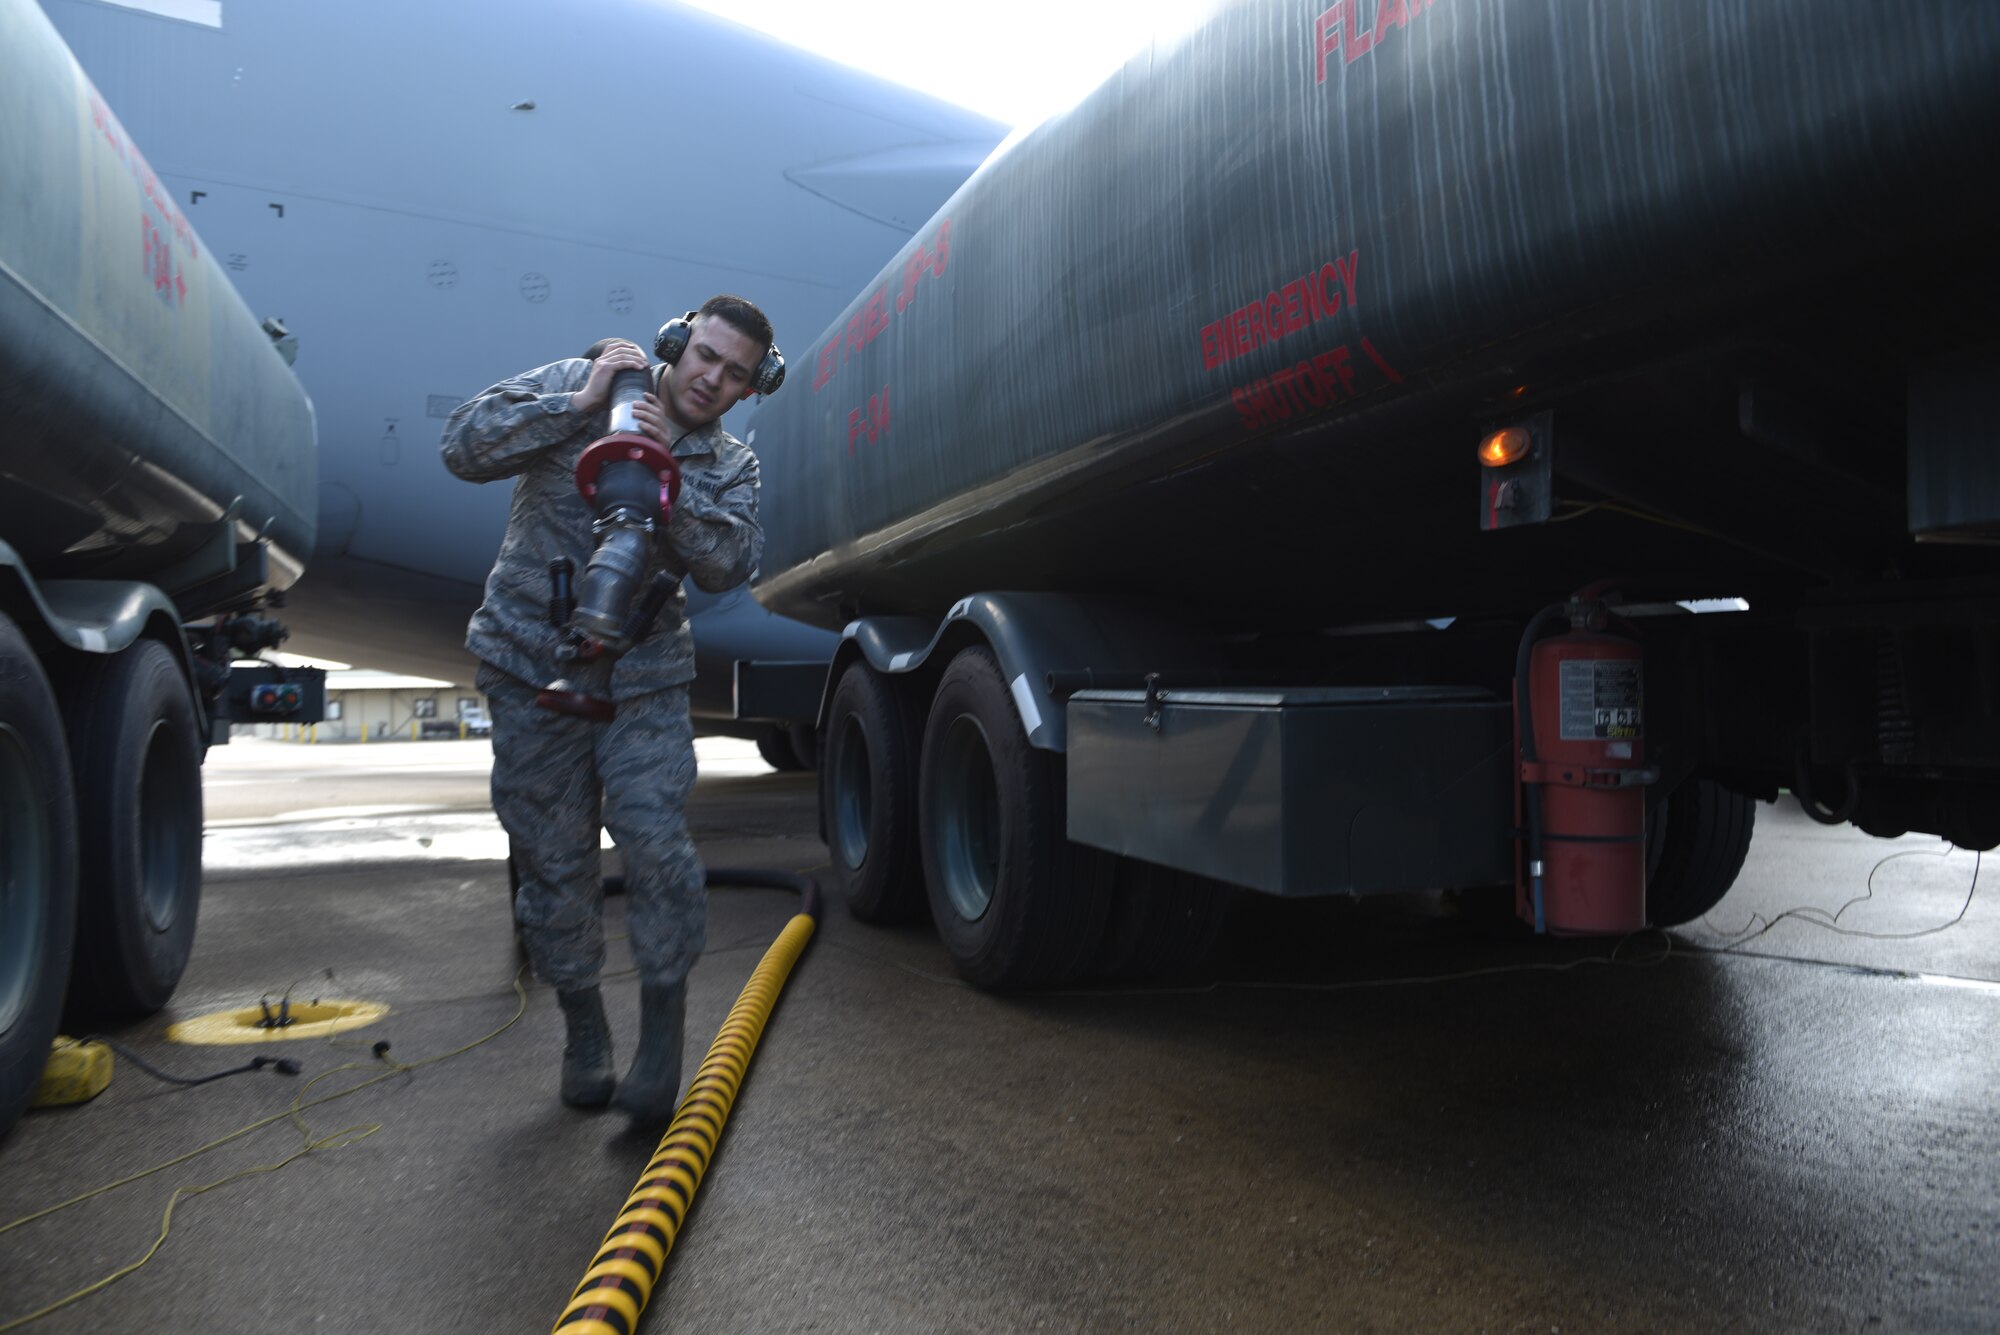 U.S. Air Force Airman 1st Class Gabriel Praslin-Trewin, 39th Logistics Readiness Squadron fuels specialist, returns the fuel hose after filling up an aircraft at Incirlik Air Base, Turkey, Feb. 1, 2019.